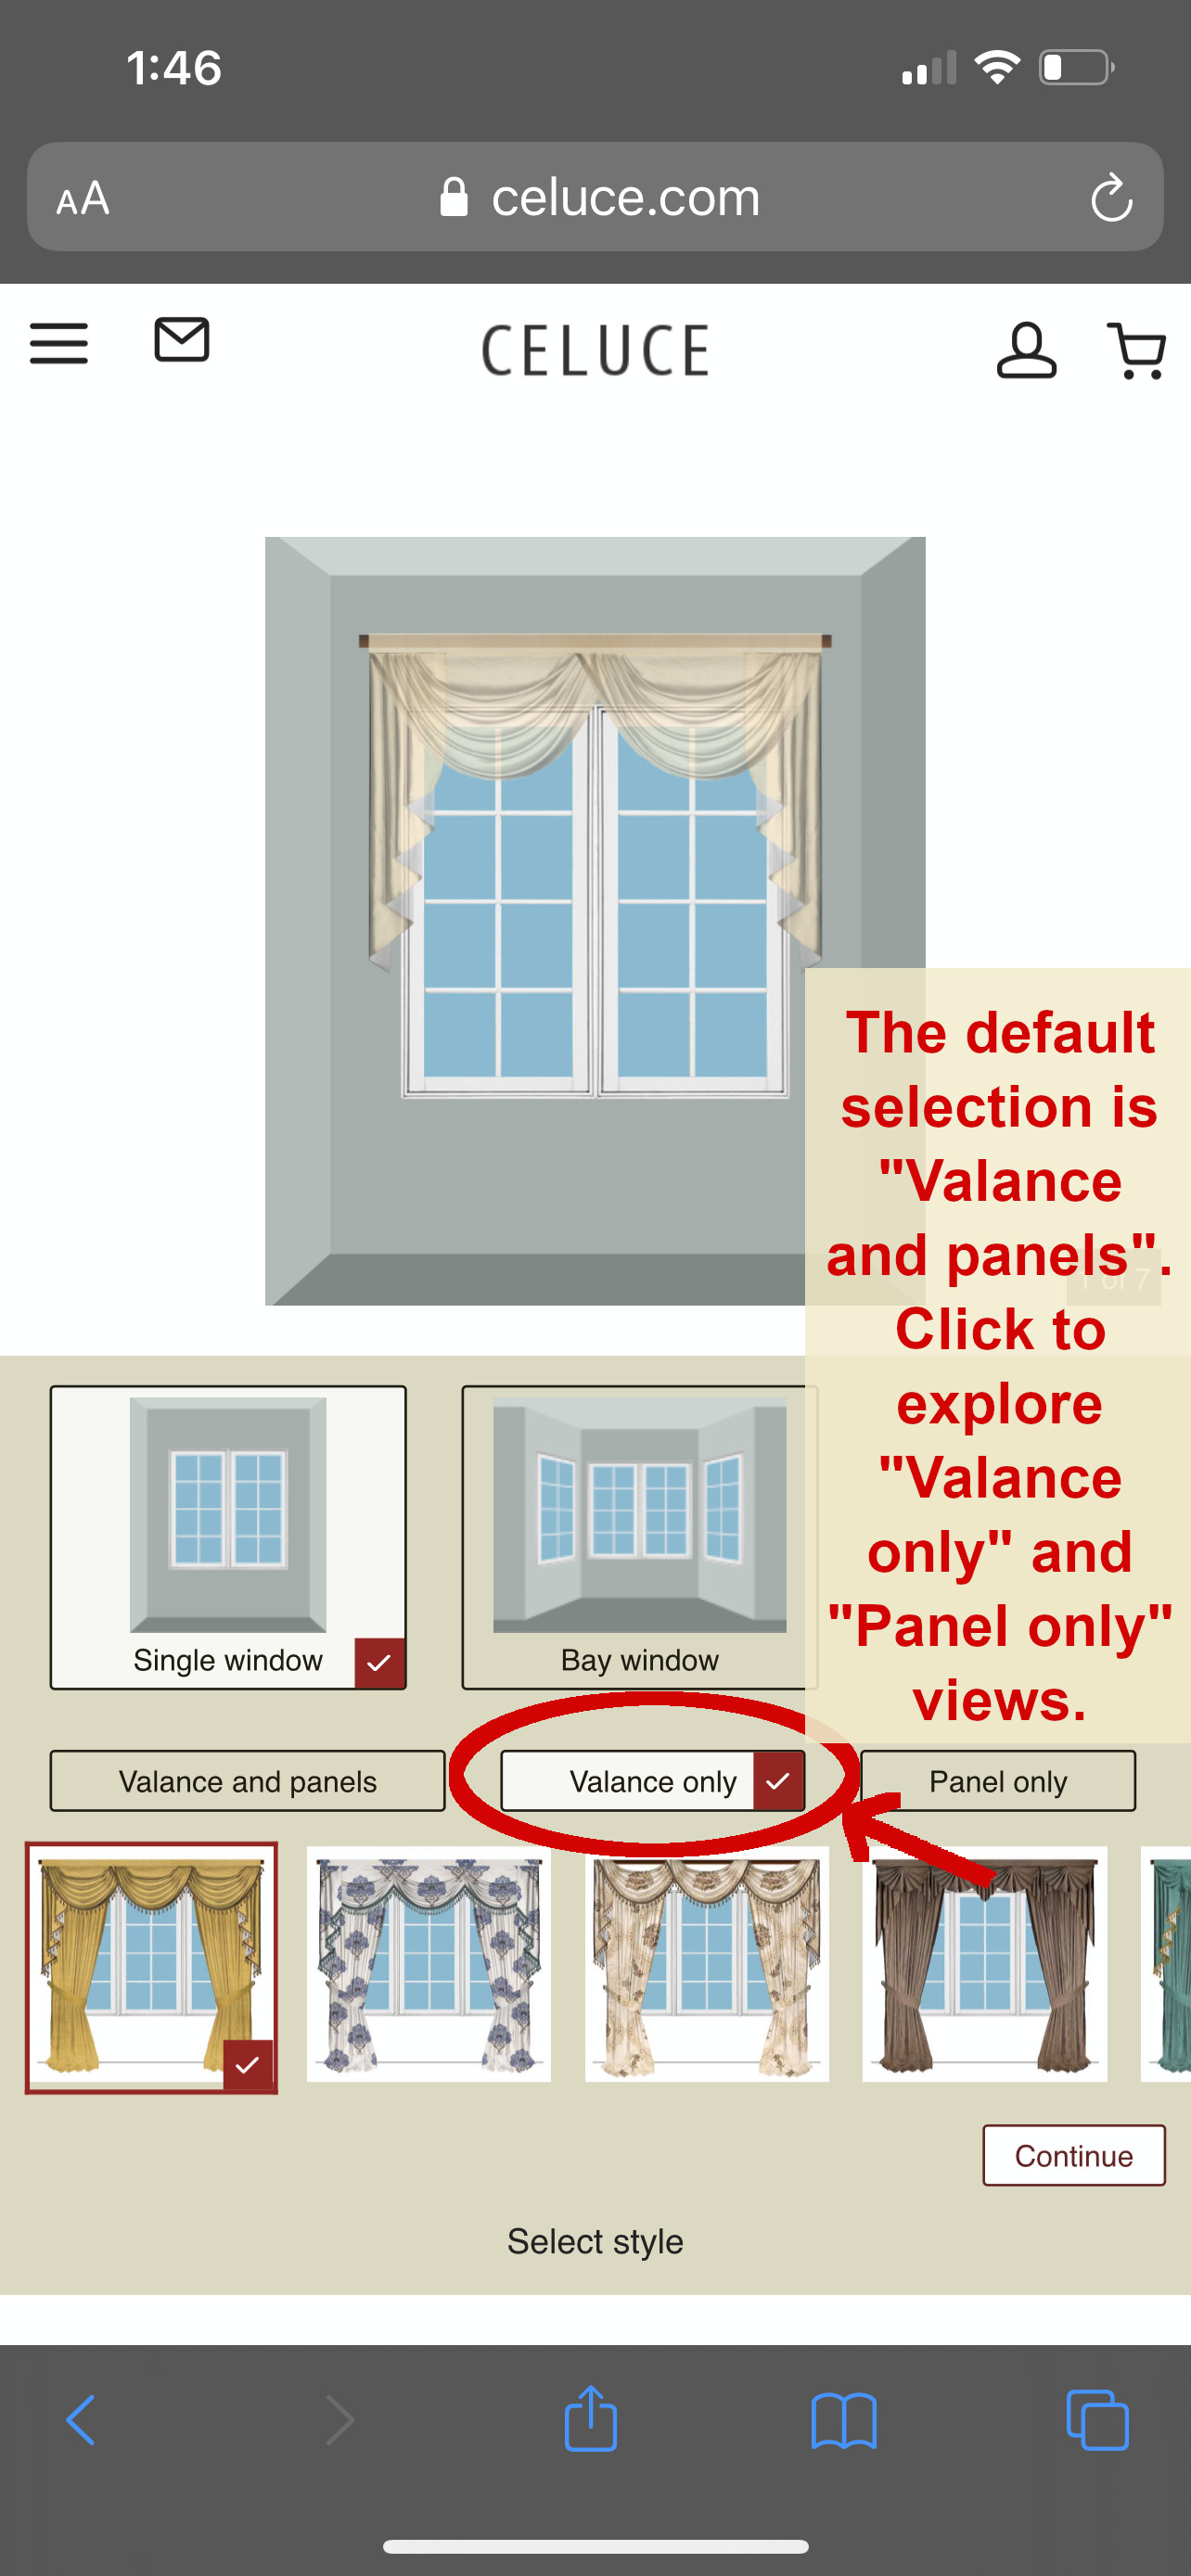 Select window treatment options